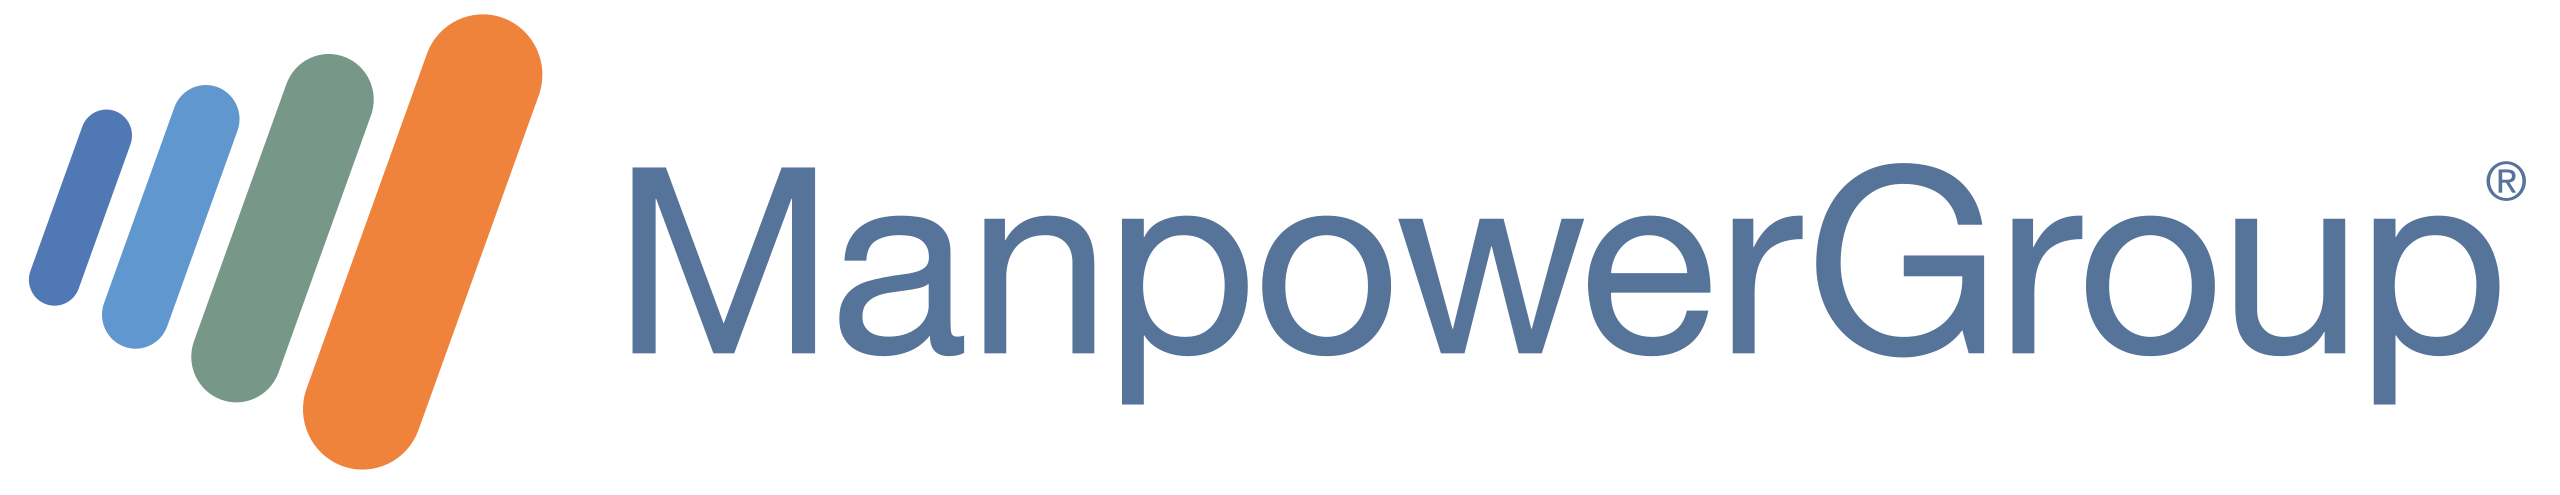 2560px-ManpowerGroup_logo.svg